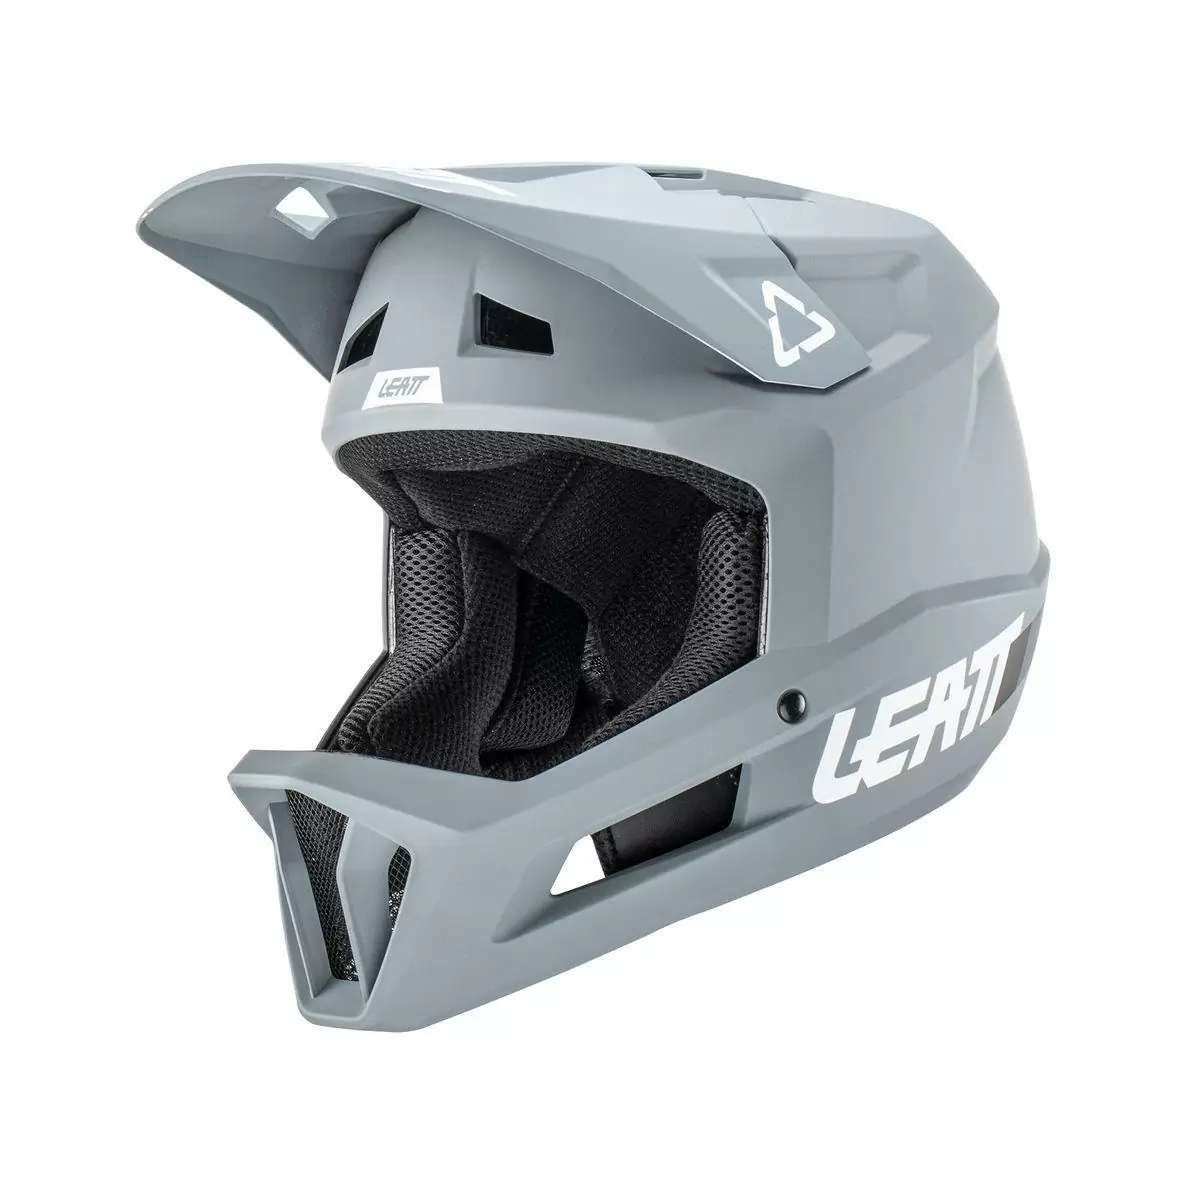 Gravity 1.0 MTB Fullface Helmet Grey Size XS (53-54cm) - image